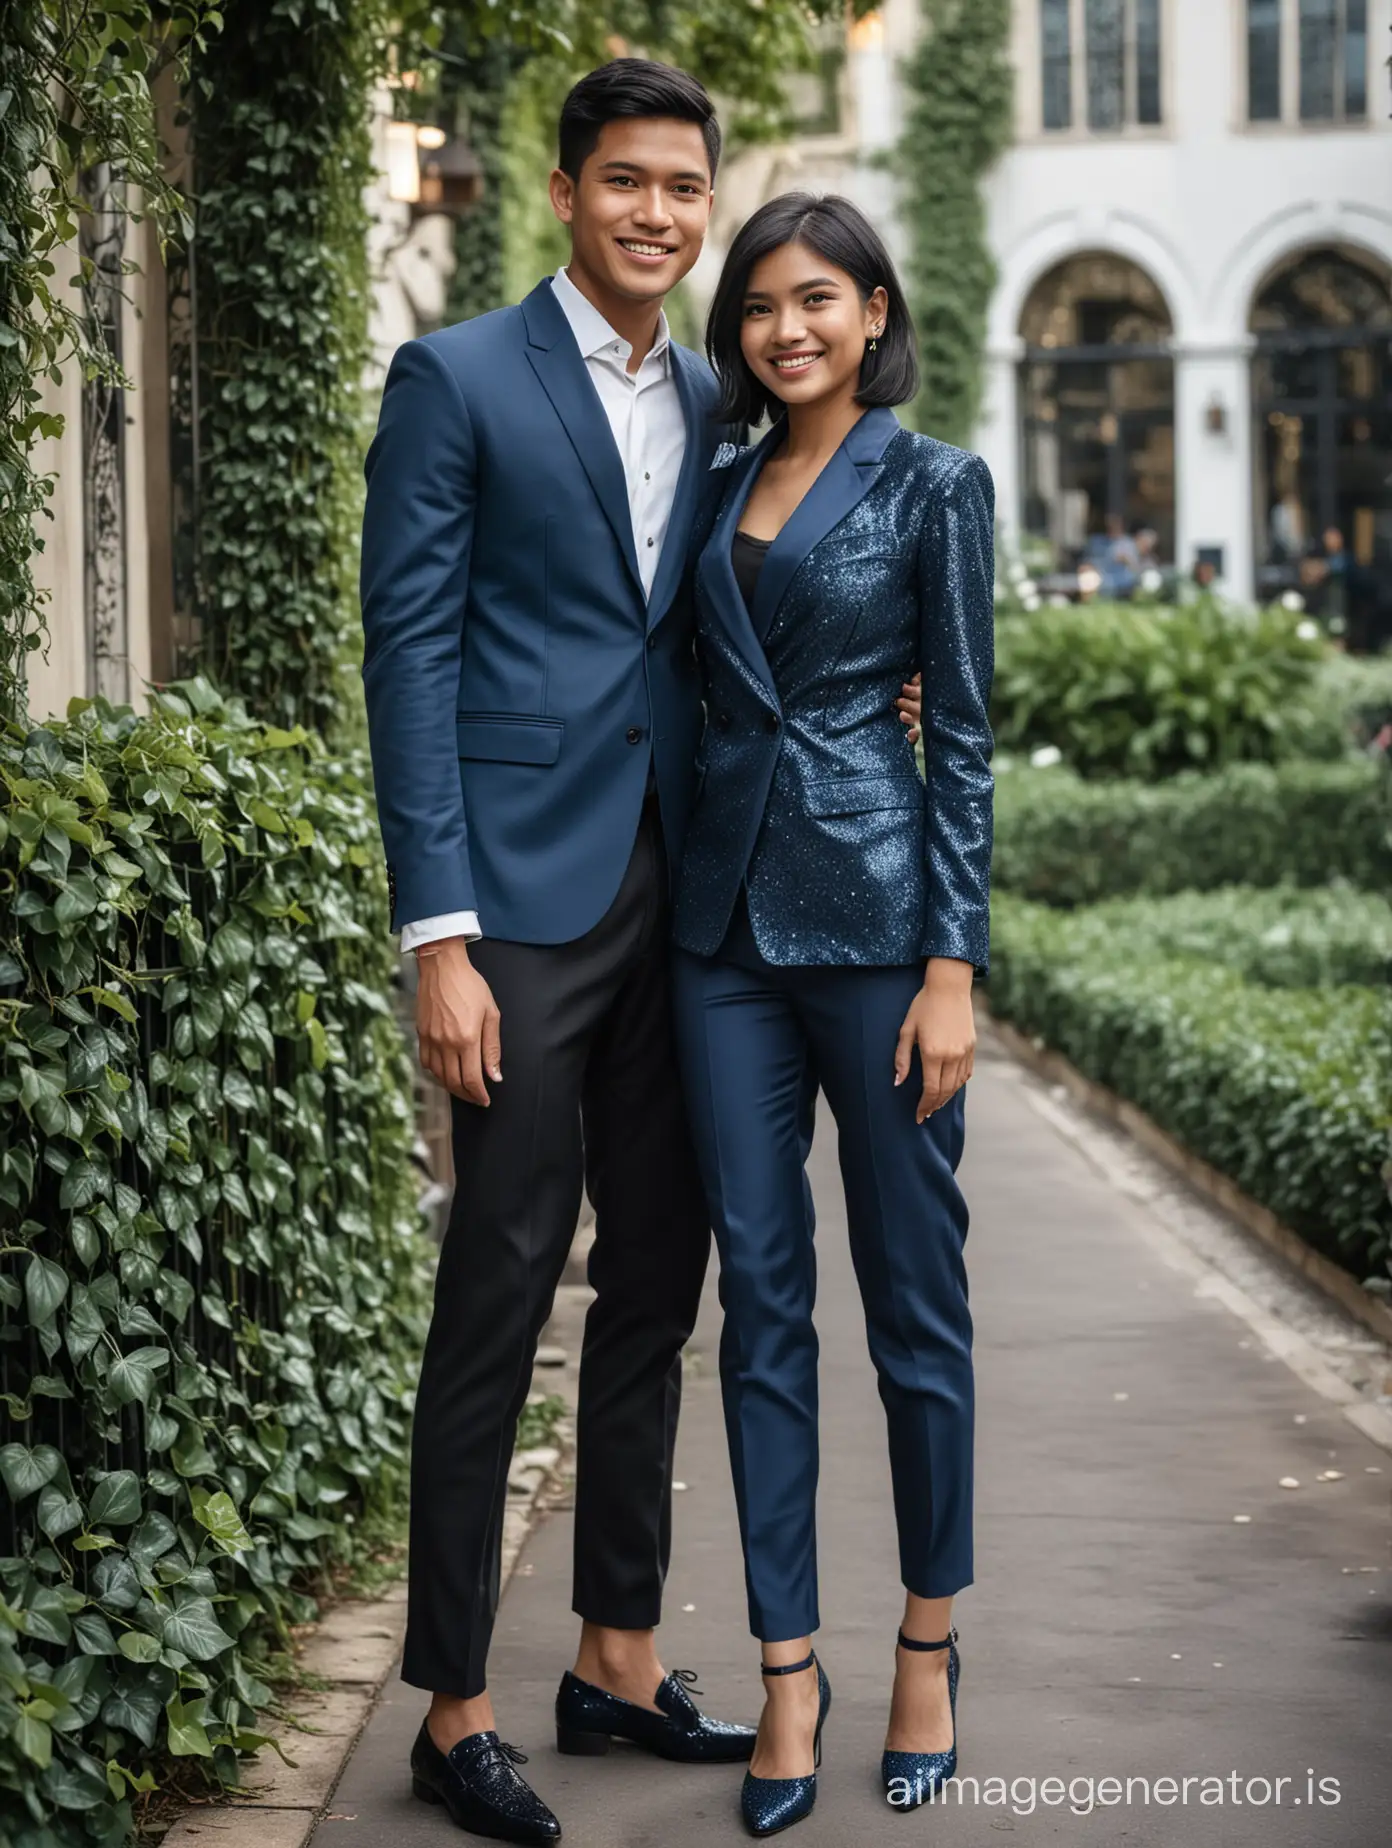 Indonesian-Couple-in-Elegant-Attire-Posing-Joyfully